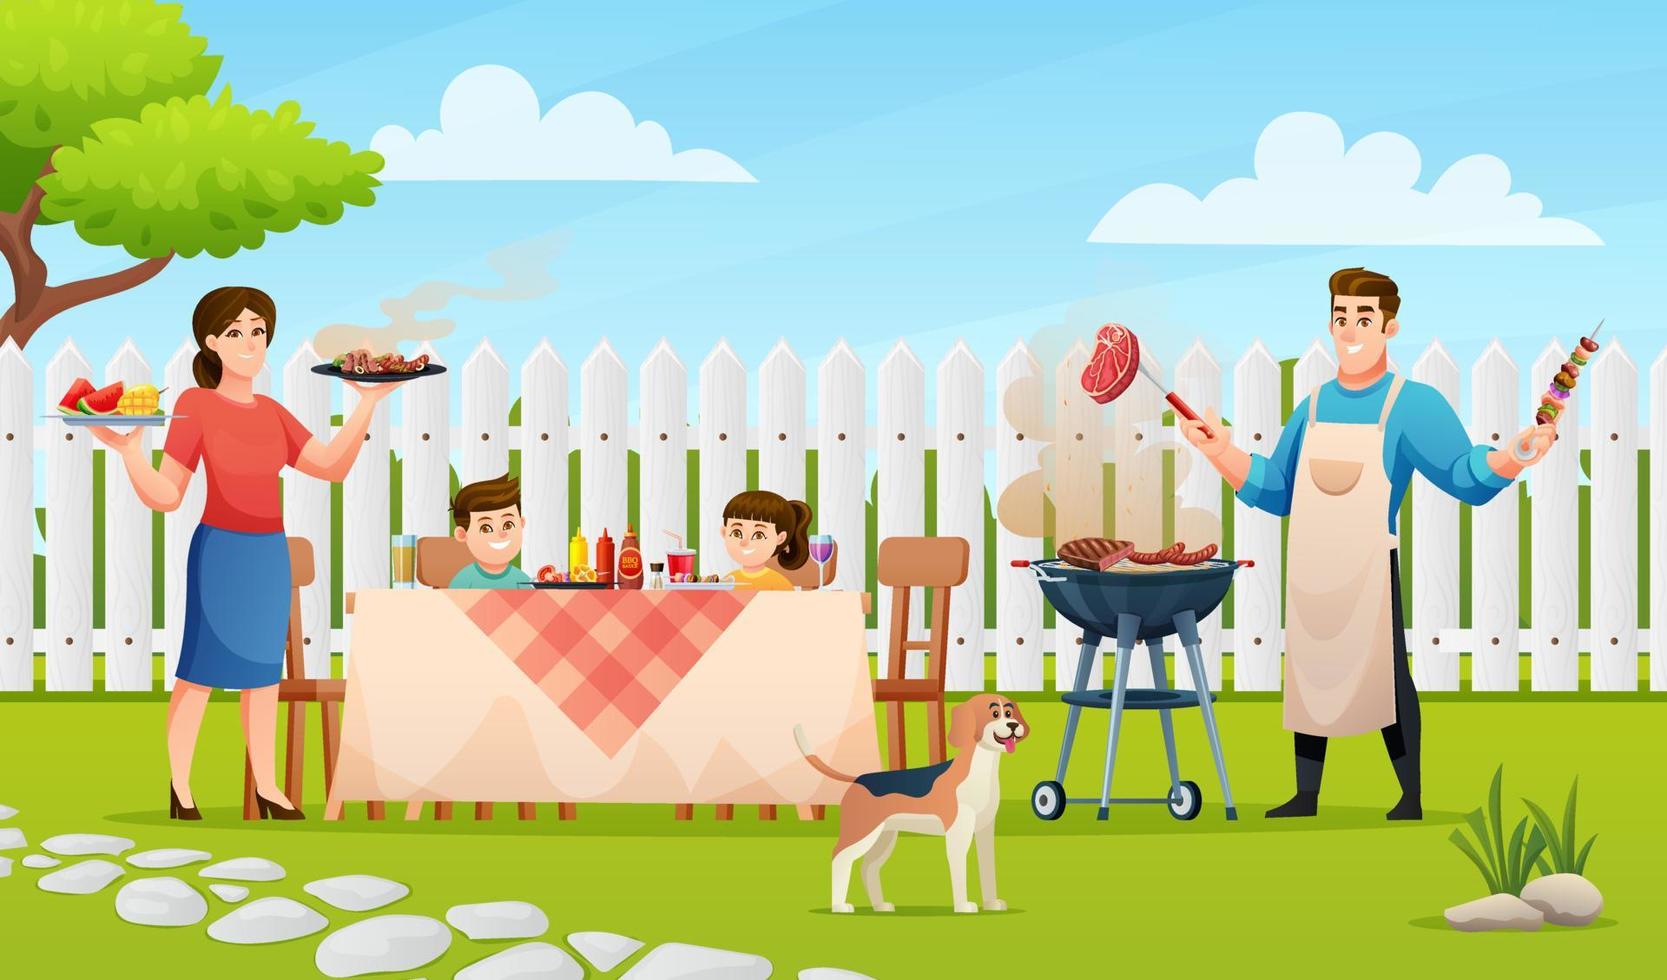 Happy family enjoying a barbecue in backyard illustration vector